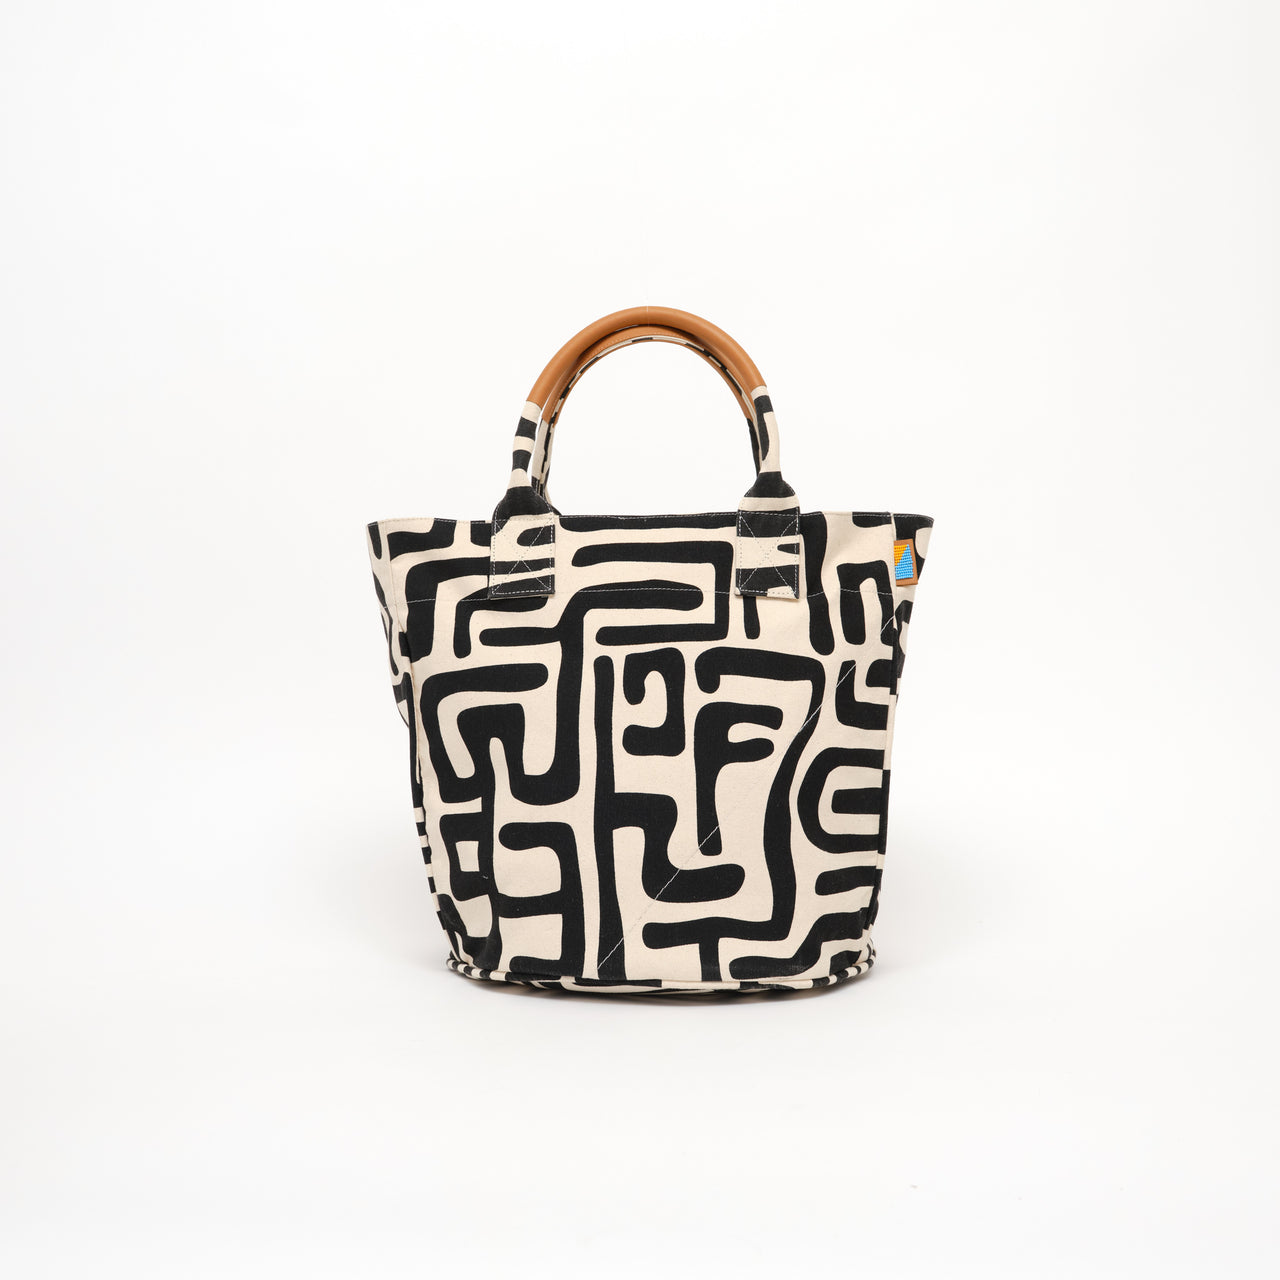 Kuba raffia bag from Kasai by kaziba-design - Hand bags - Afrikrea